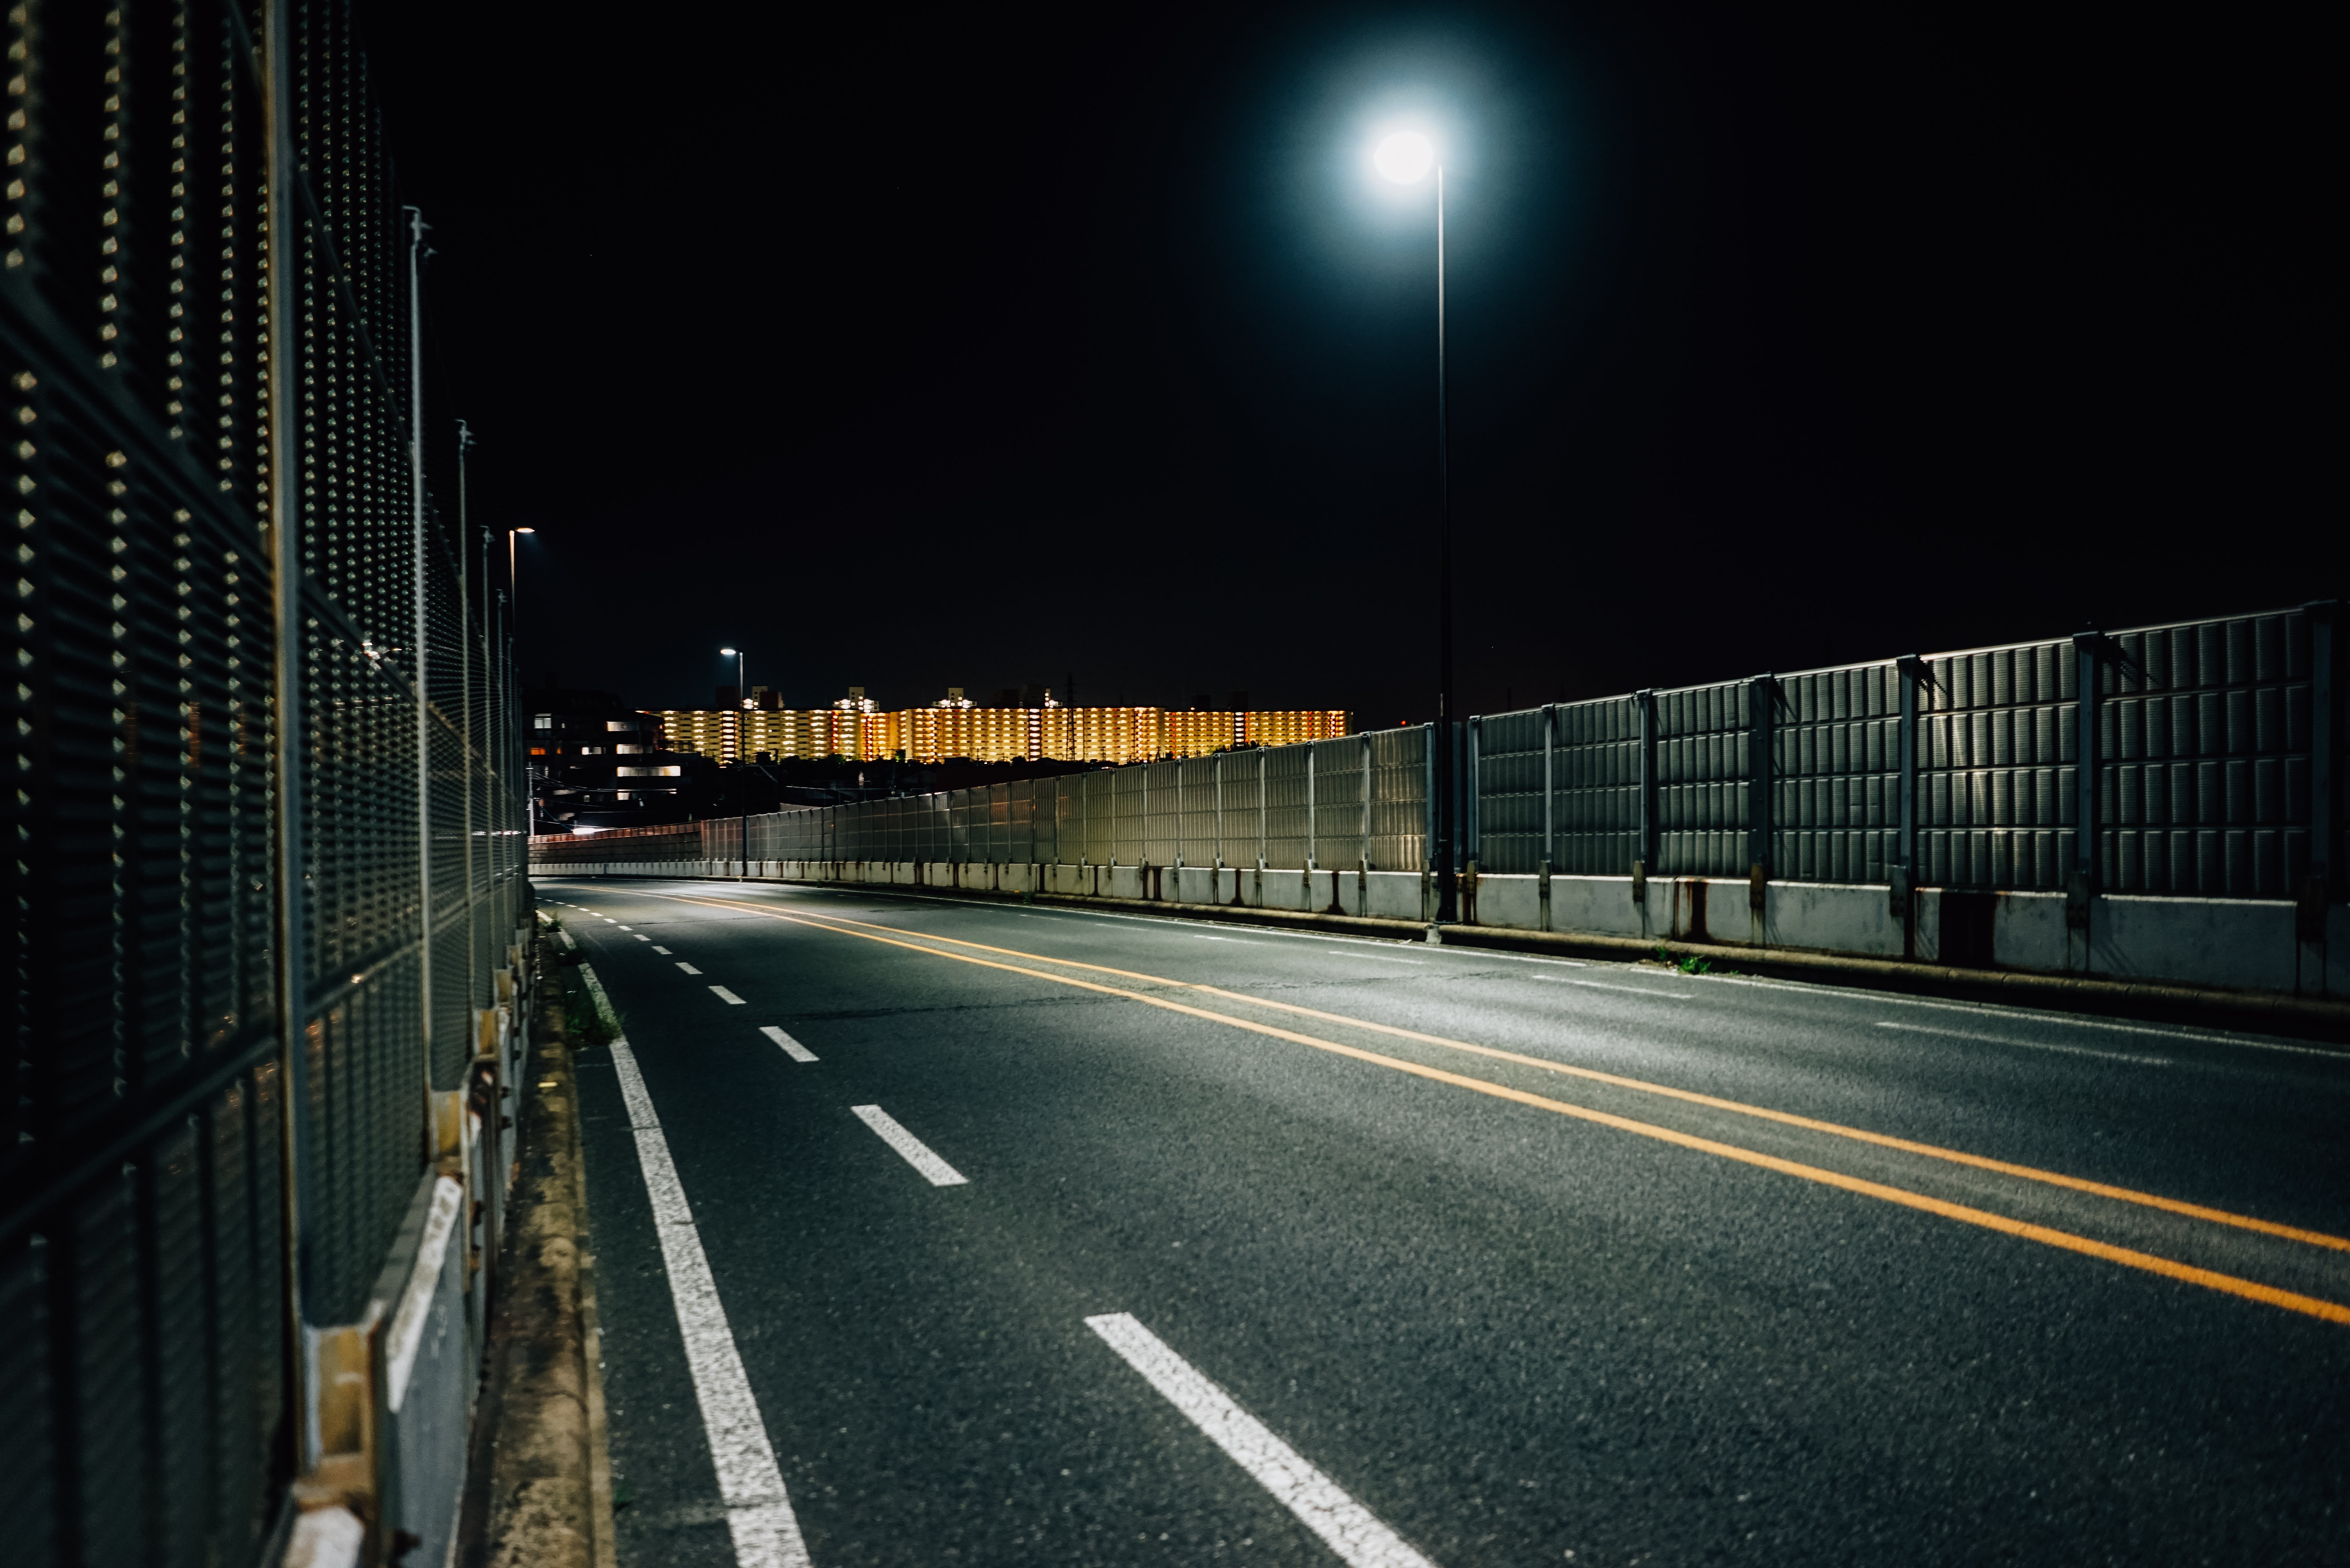 Autostrada vuota e chiusa di notte foto